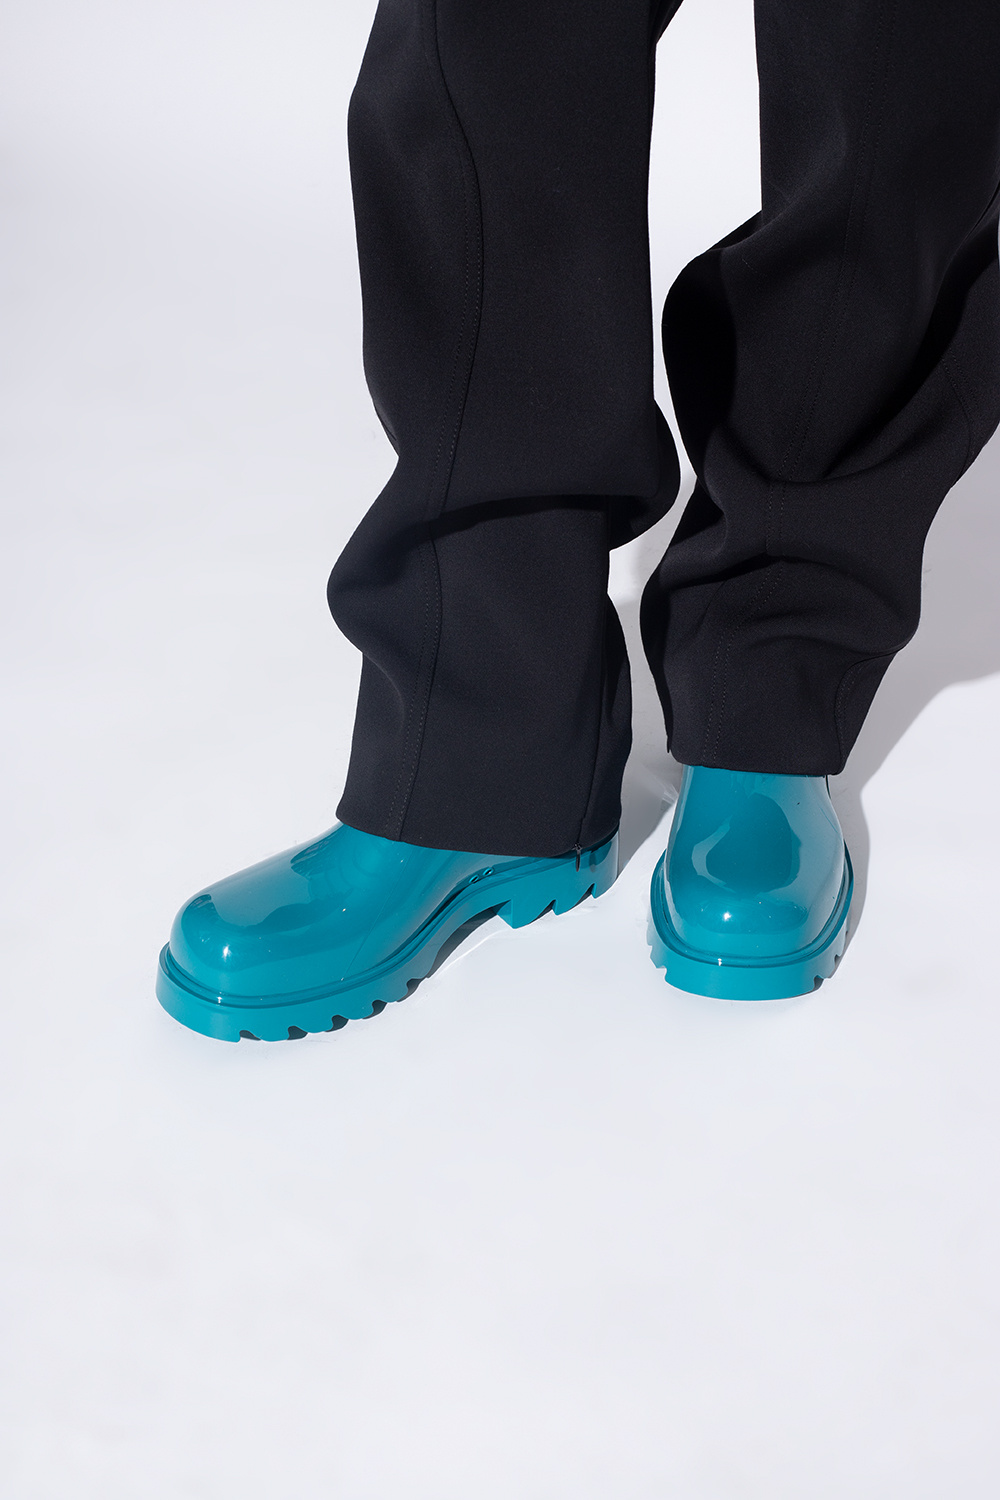 Bottega Veneta Blue Stride Rubber Ankle Boots for Men Mens Shoes Boots Casual boots 